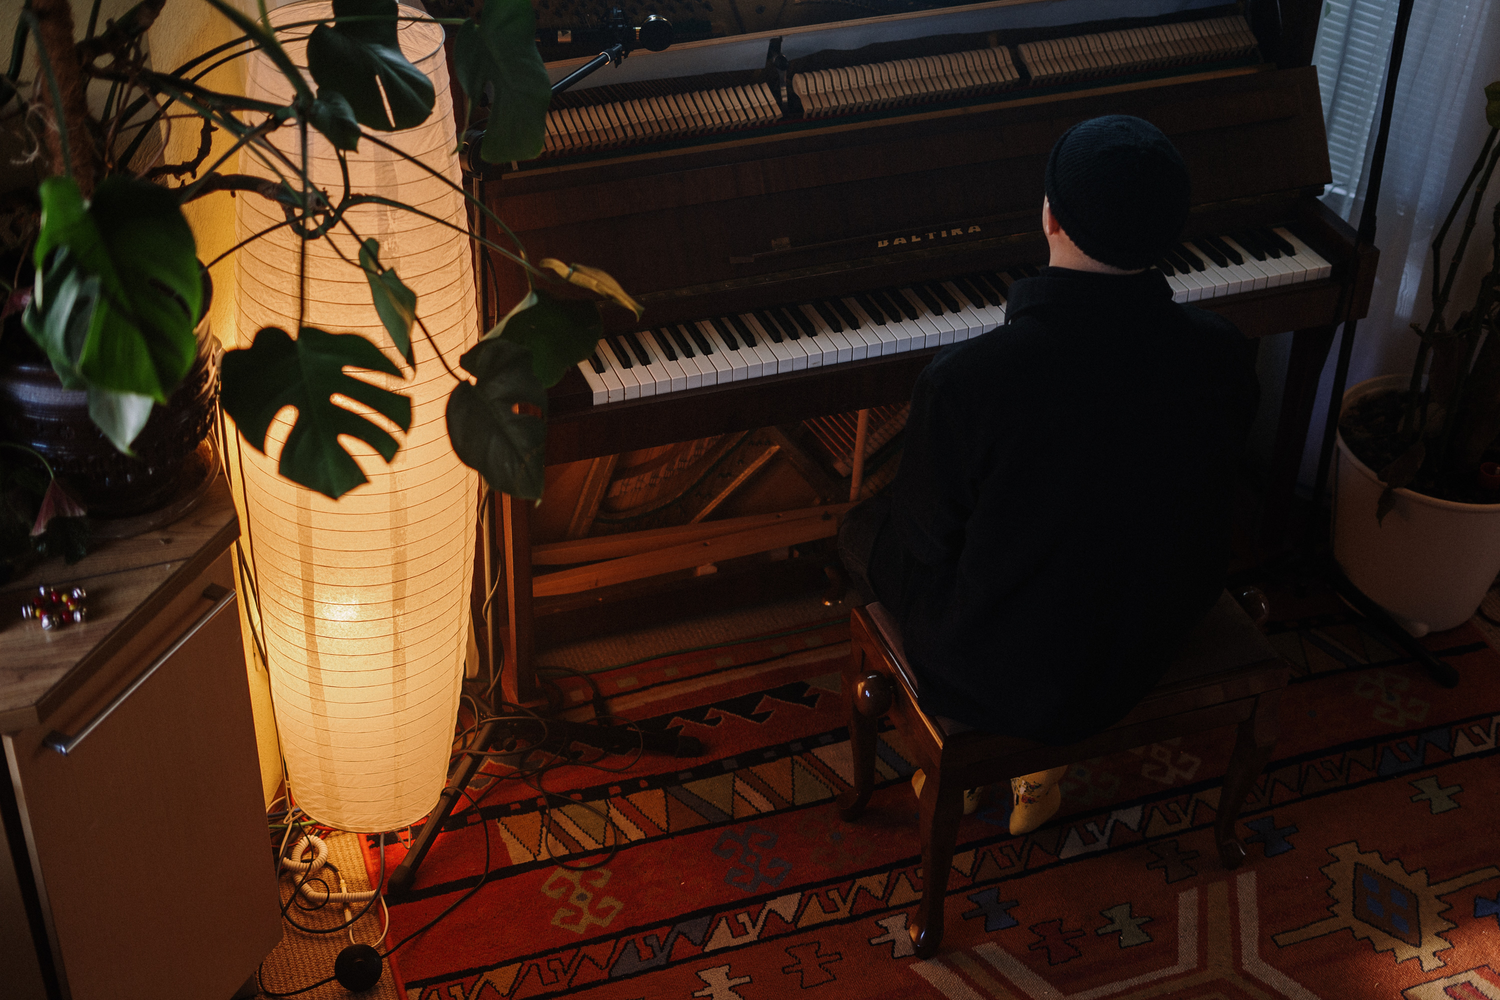 Pianist on a Warm home studio